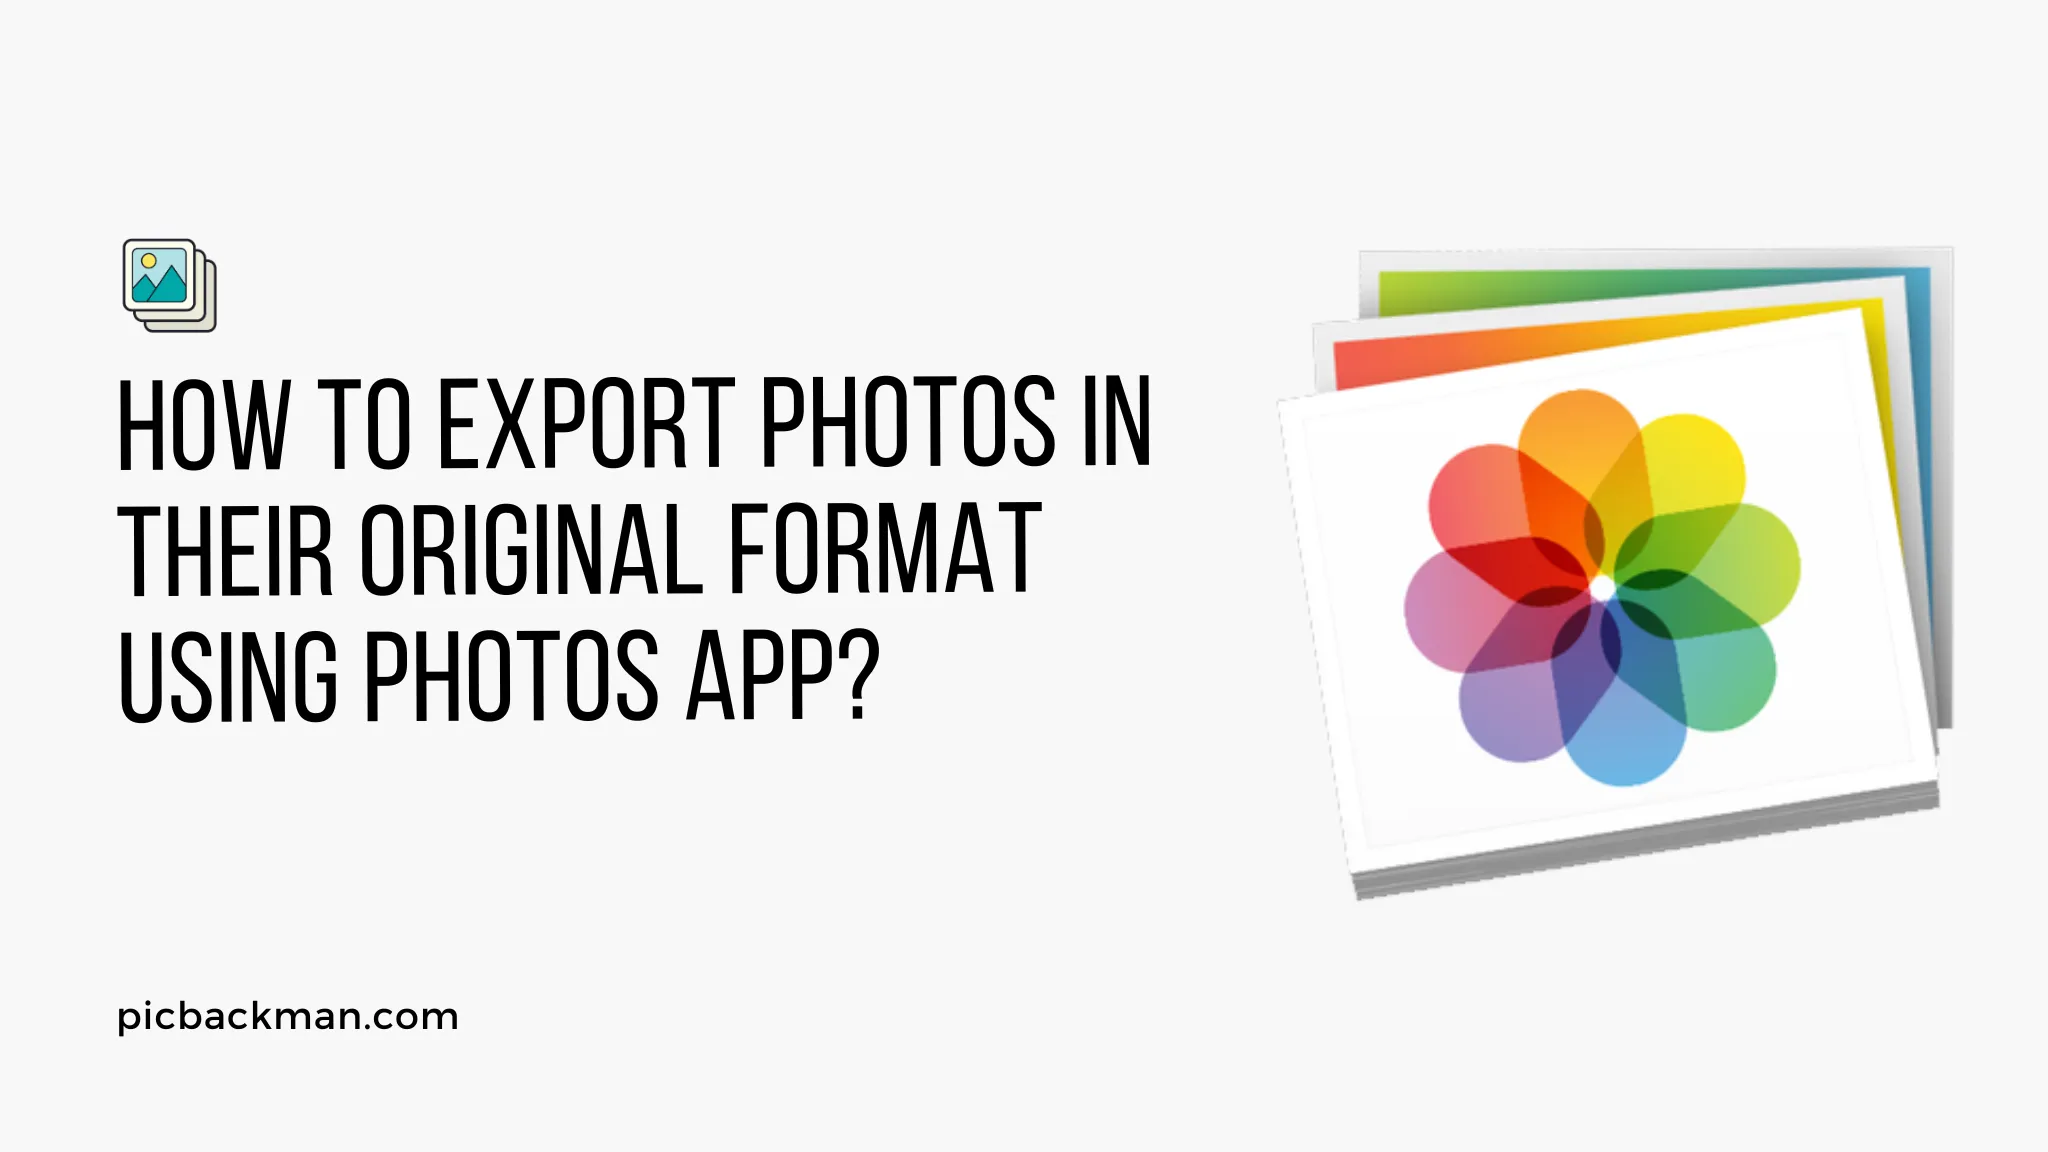 How to Export Photos in their Original Format using Photos App?